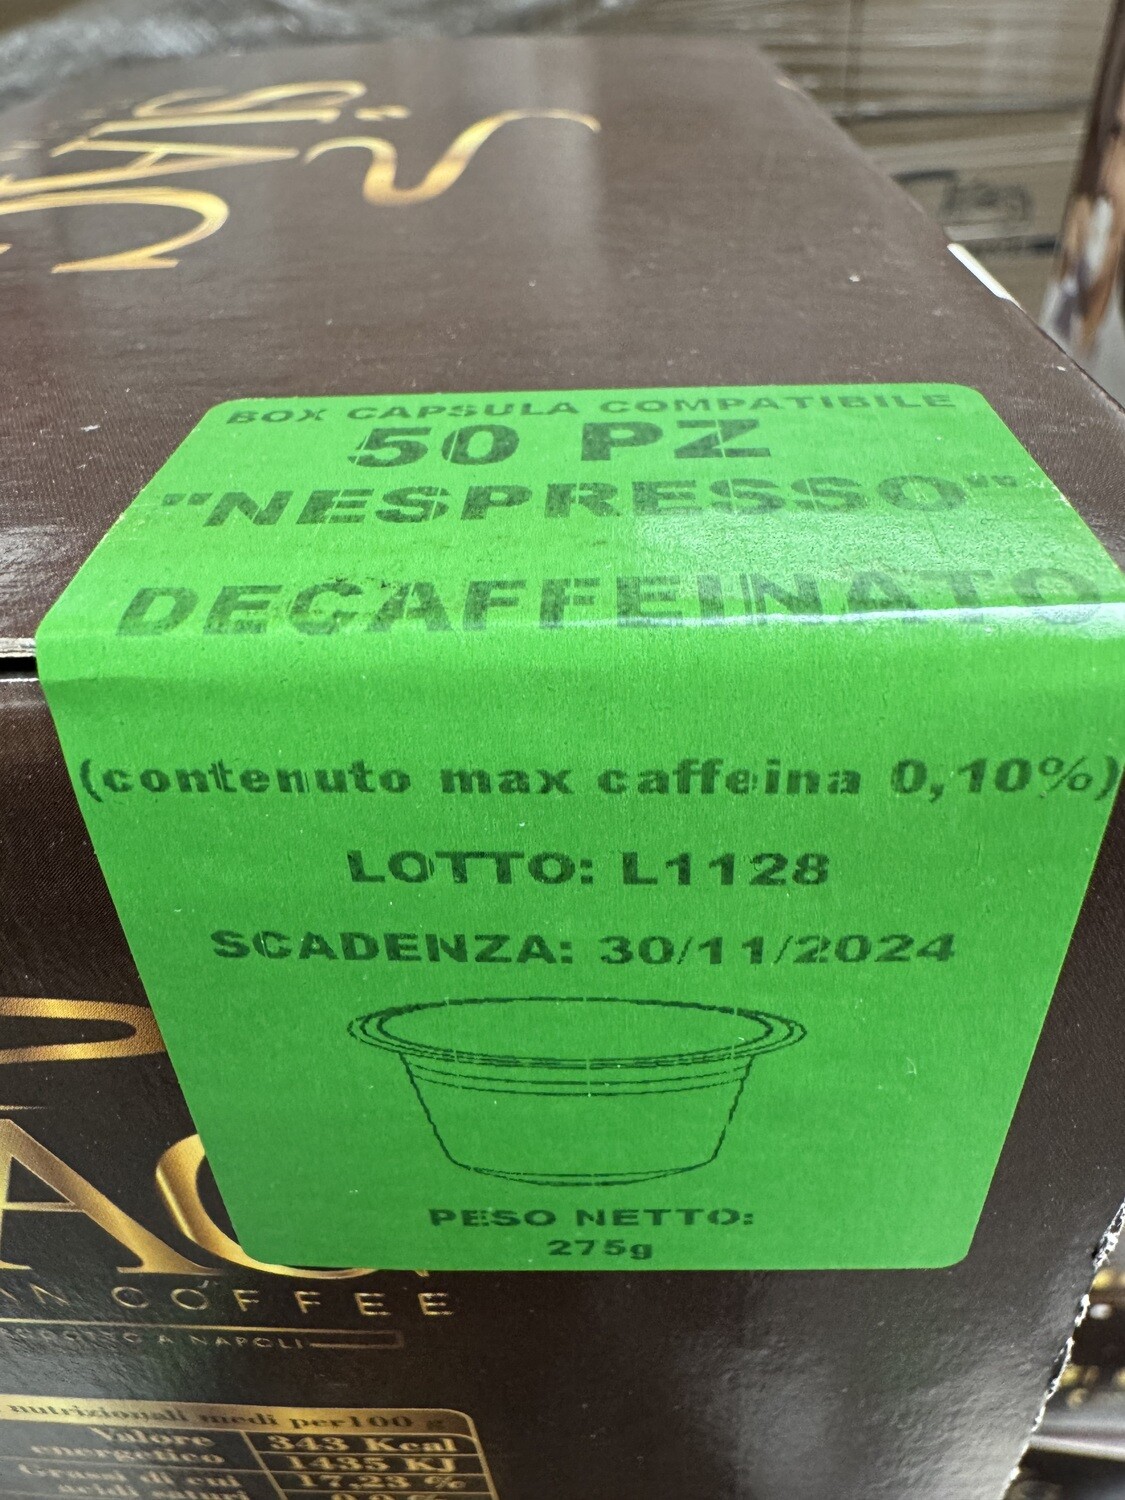 DECAF Nespresso compatible capsules